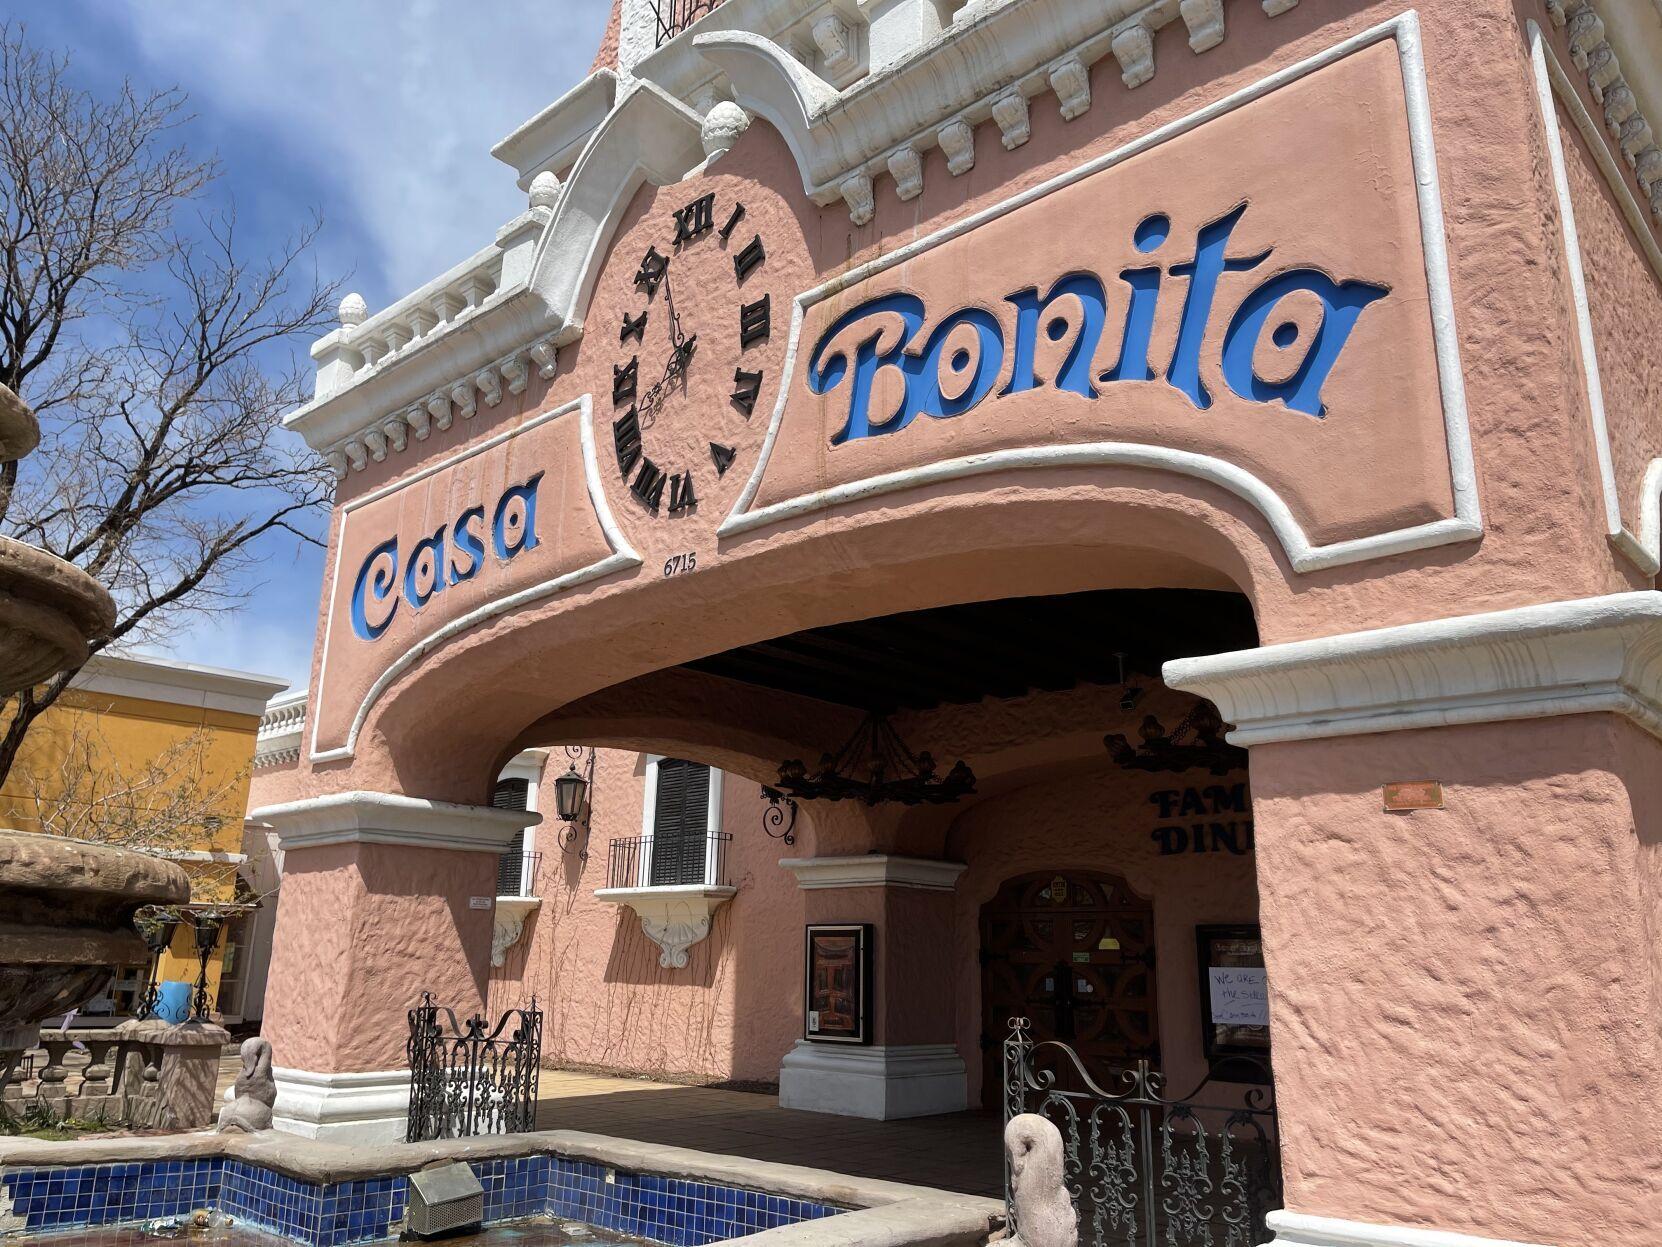 South Park creators to purchase the Casa Bonita in Colorado